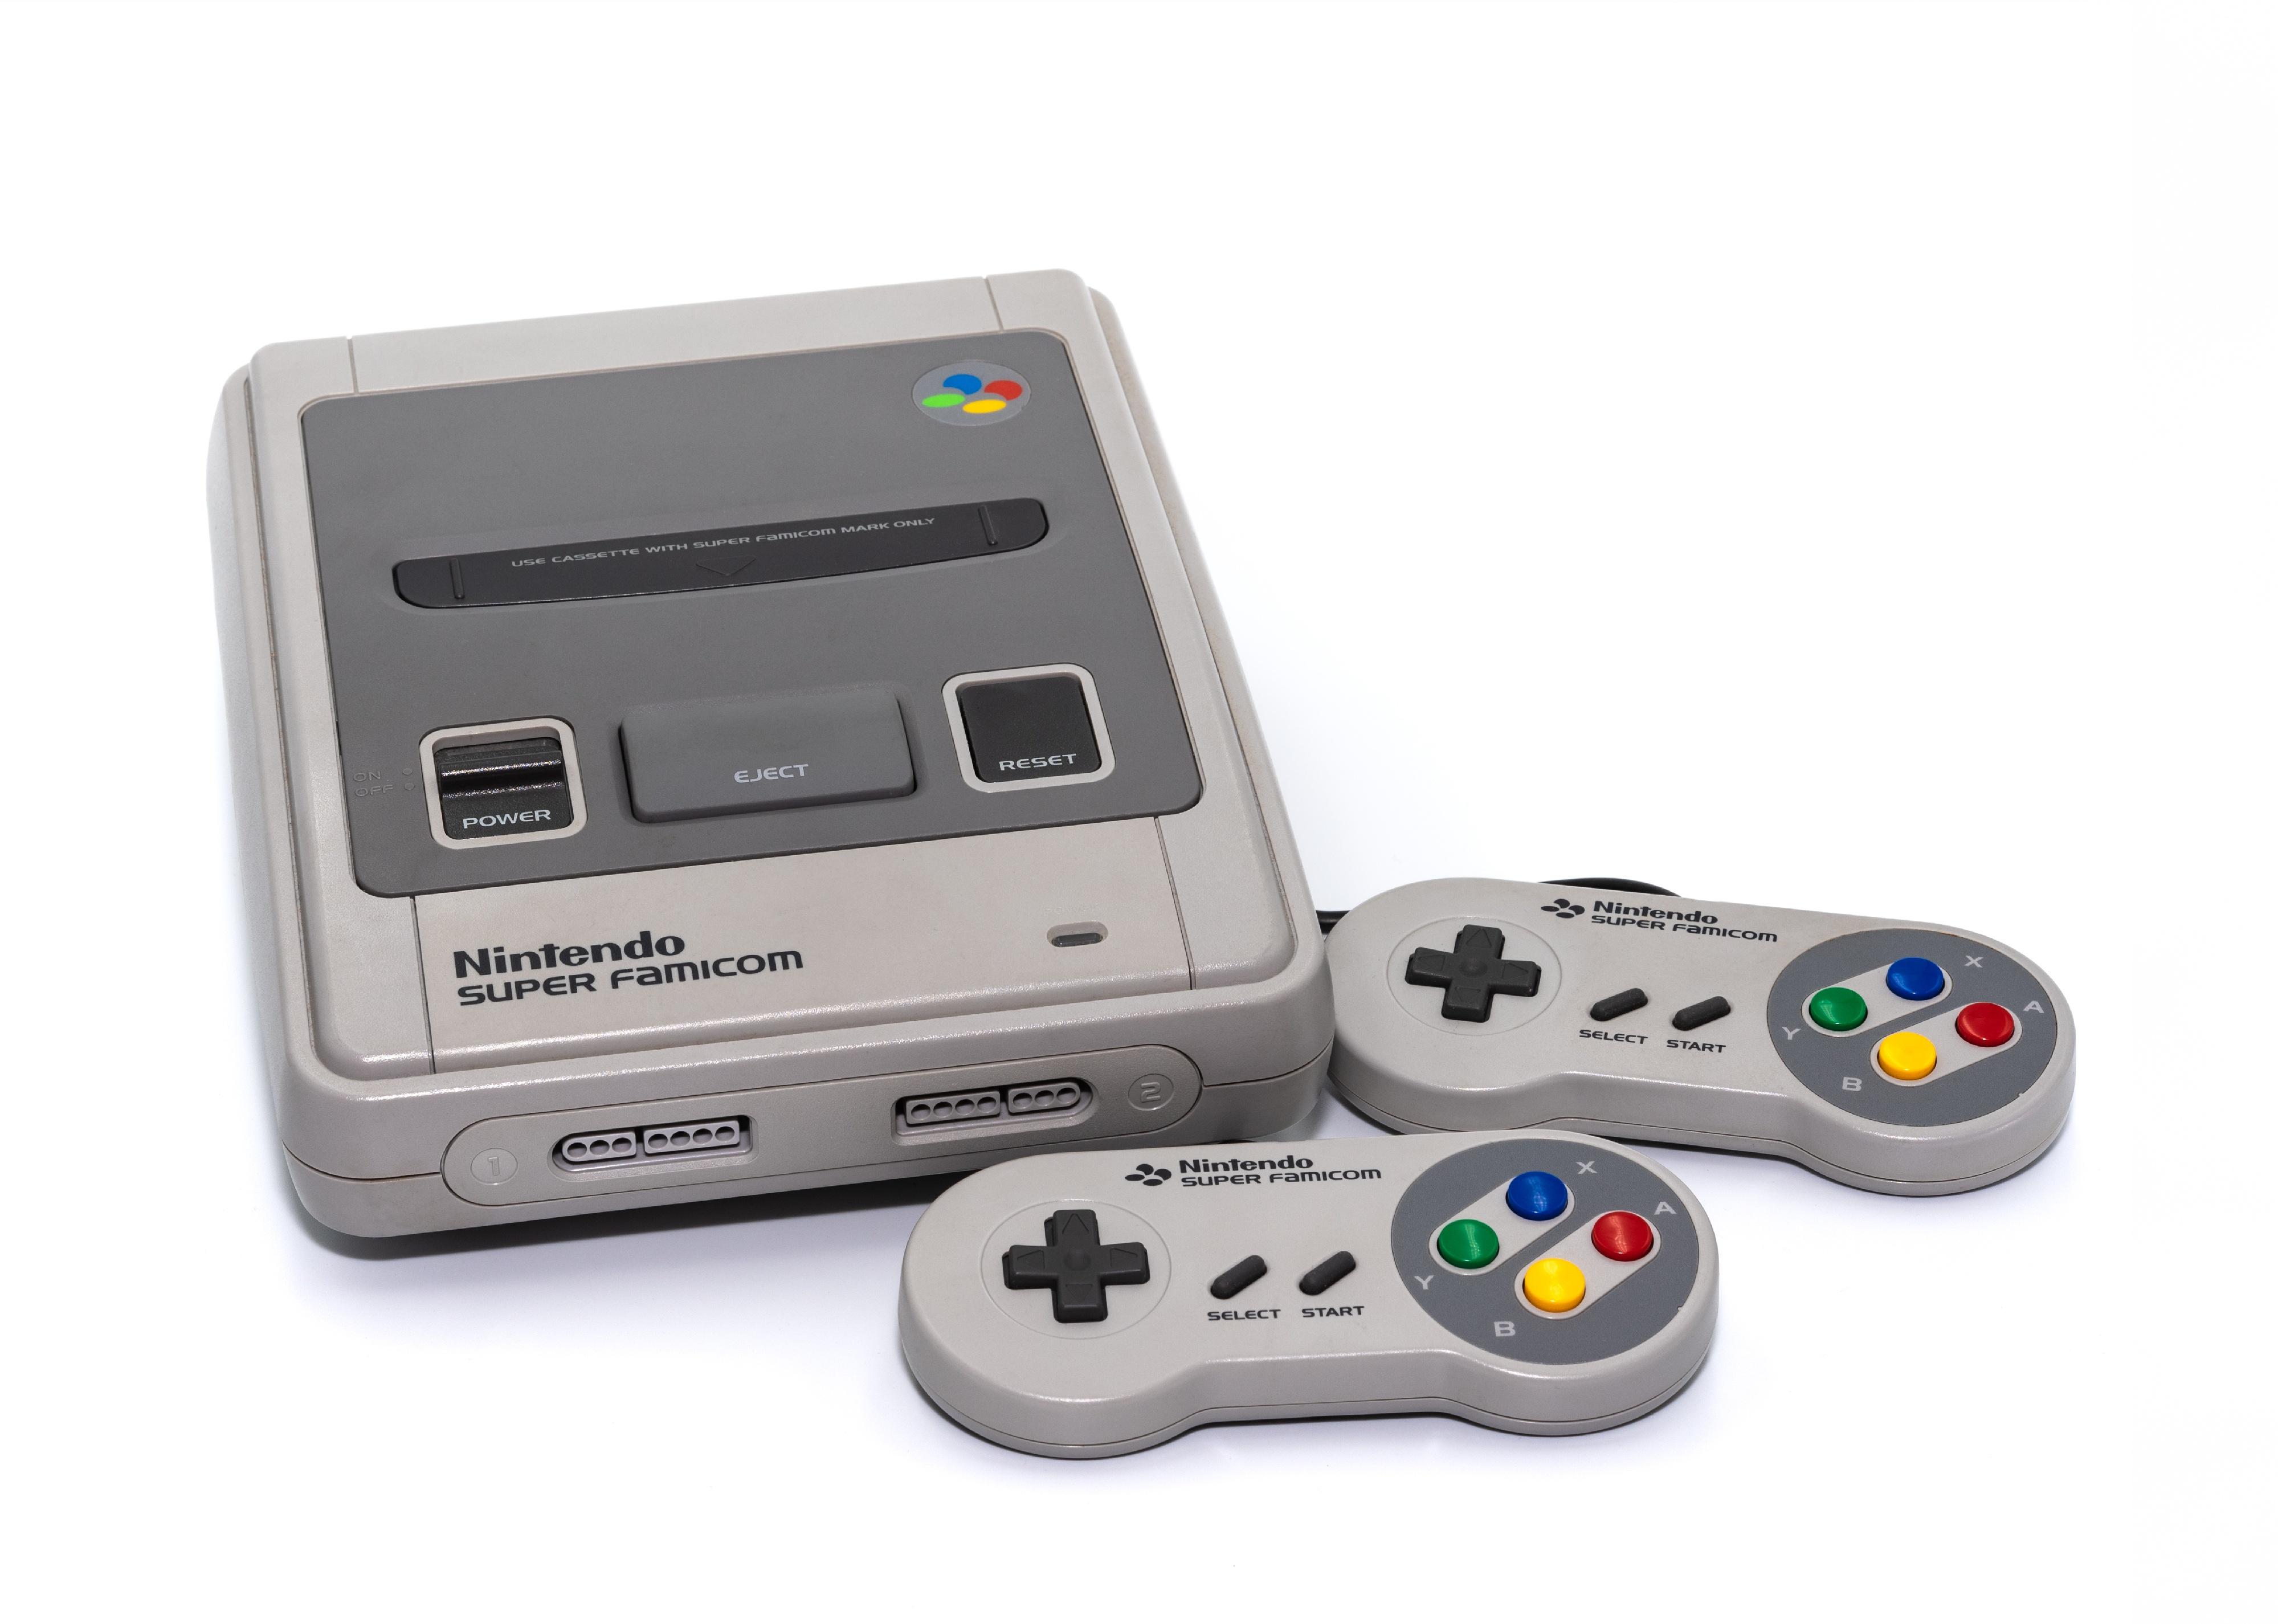 Nintendo Entertainment System on white background.